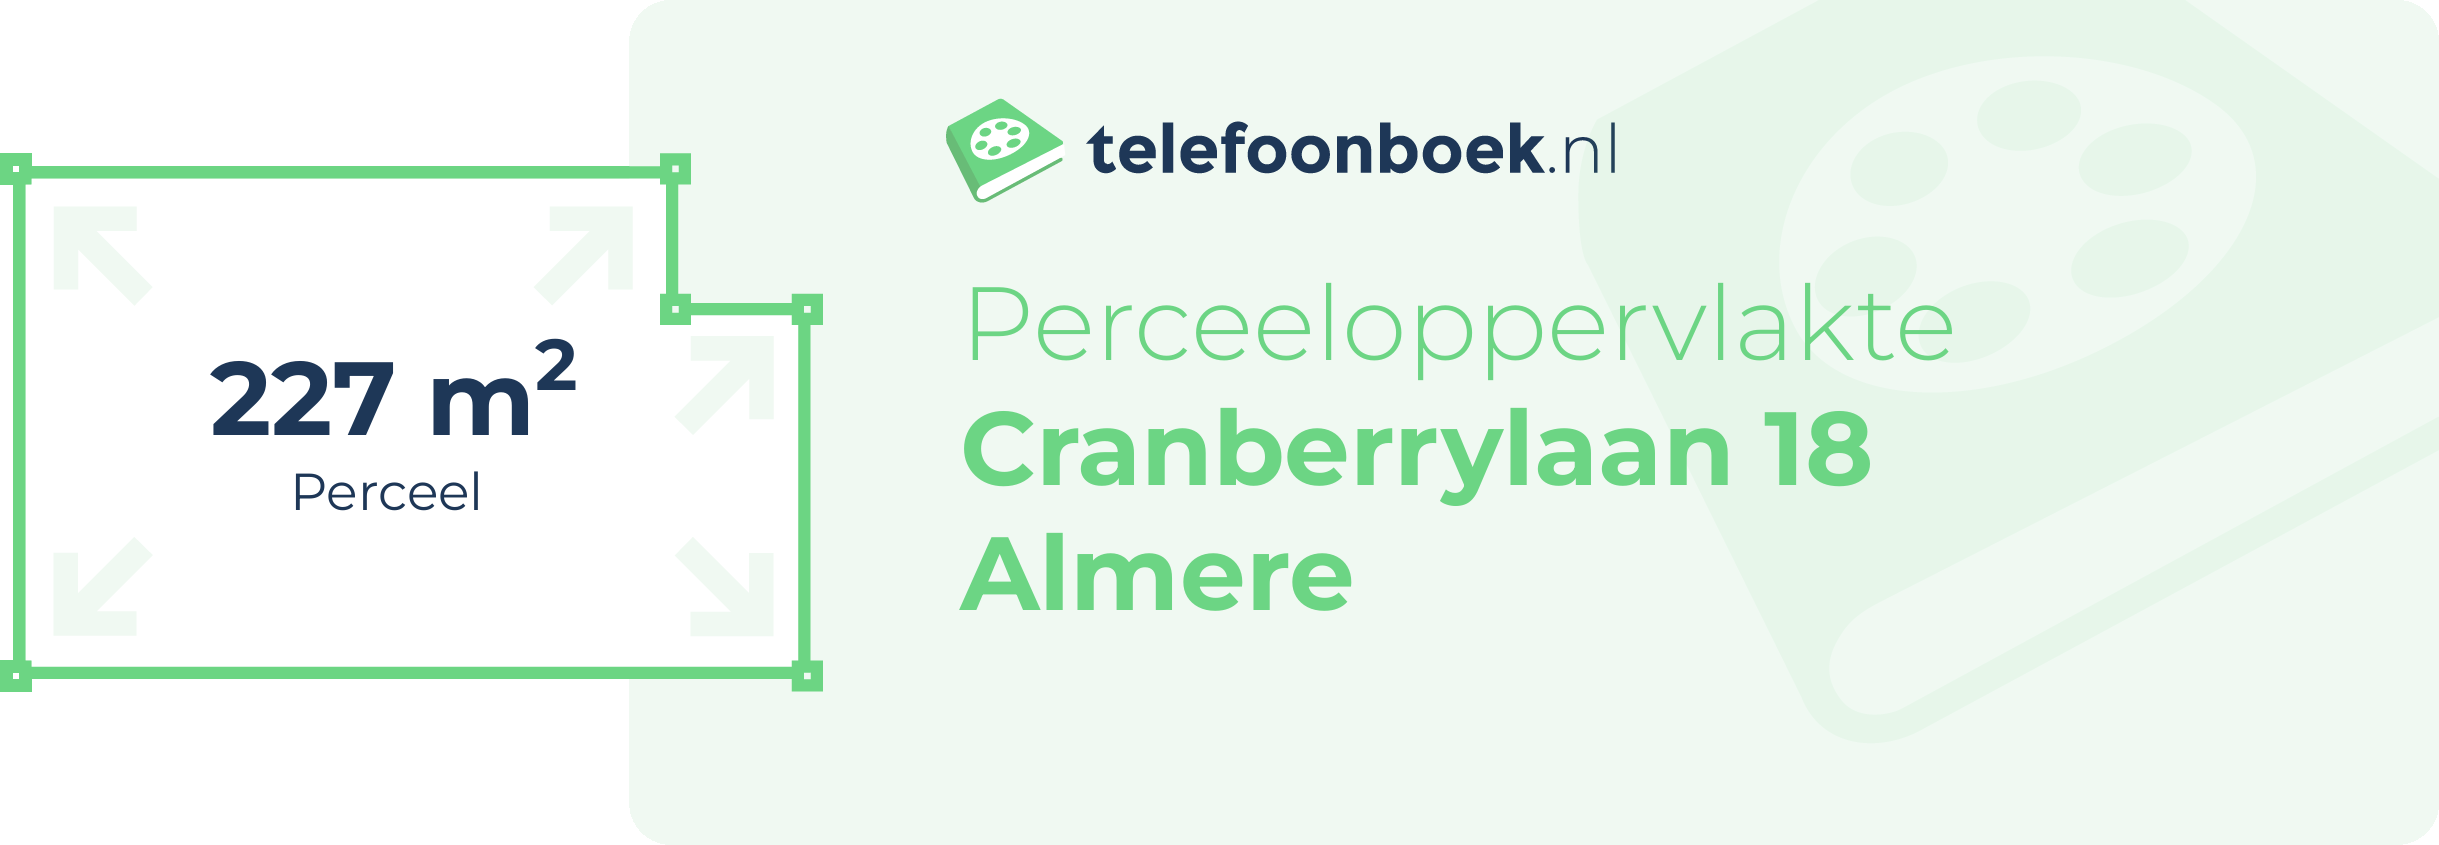 Perceeloppervlakte Cranberrylaan 18 Almere